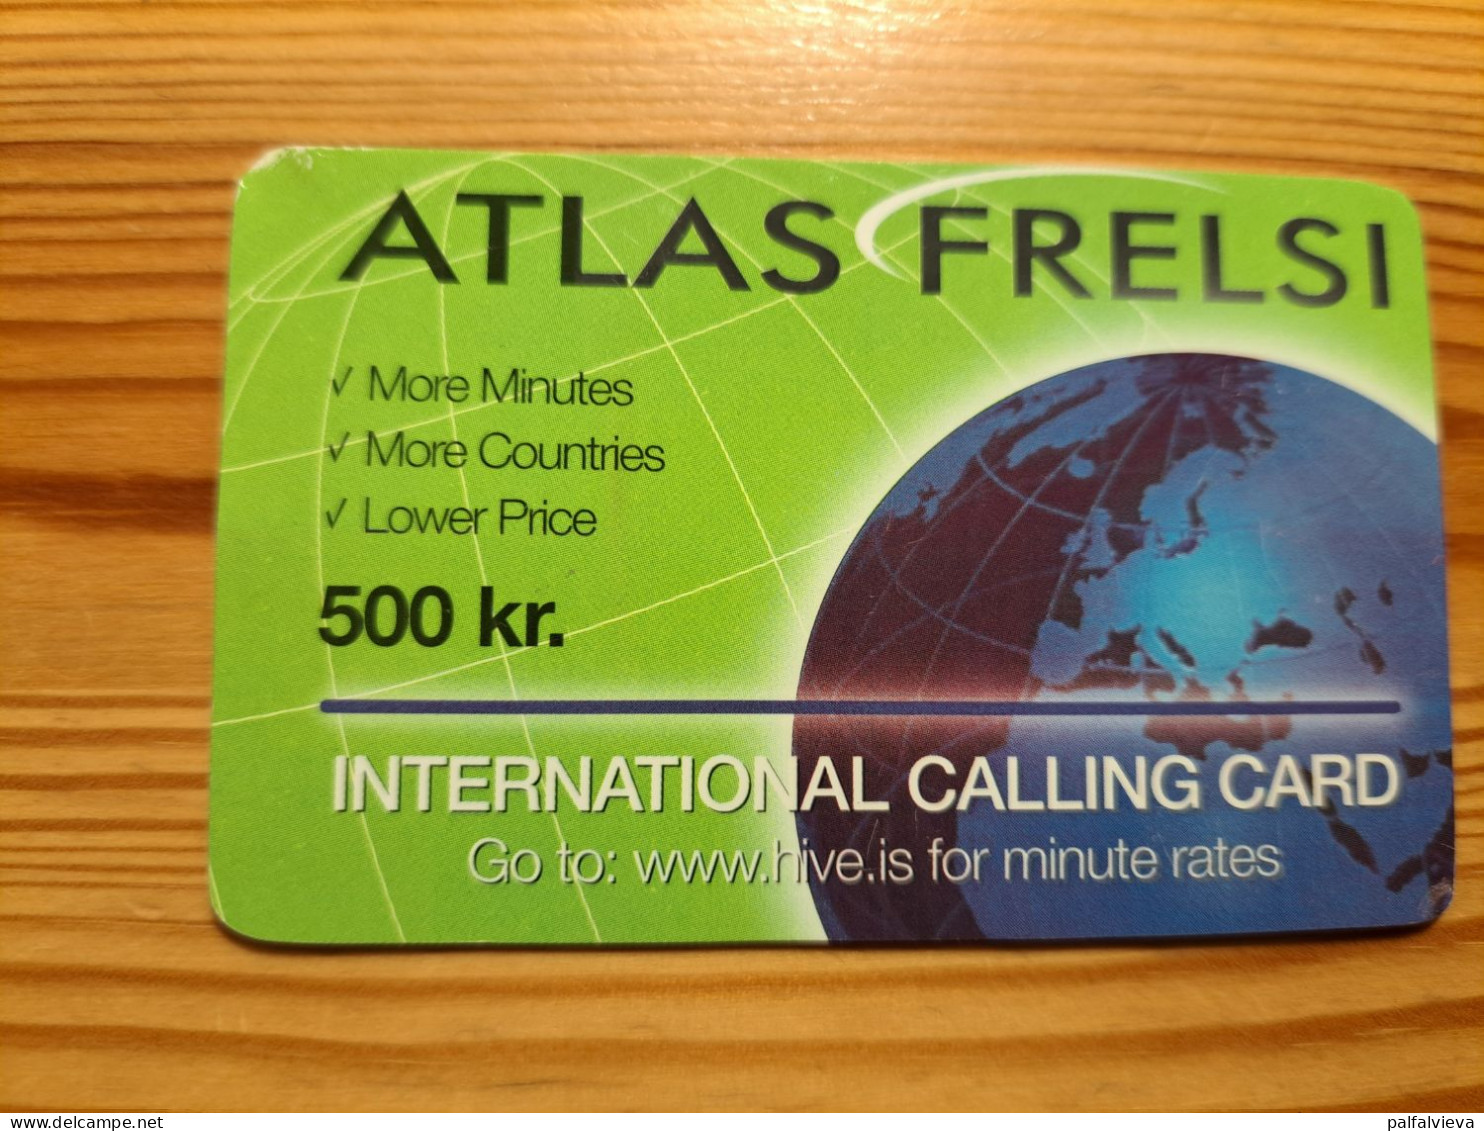 Prepaid Phonecard Iceland, Hive - Atlas Frelsi - Iceland